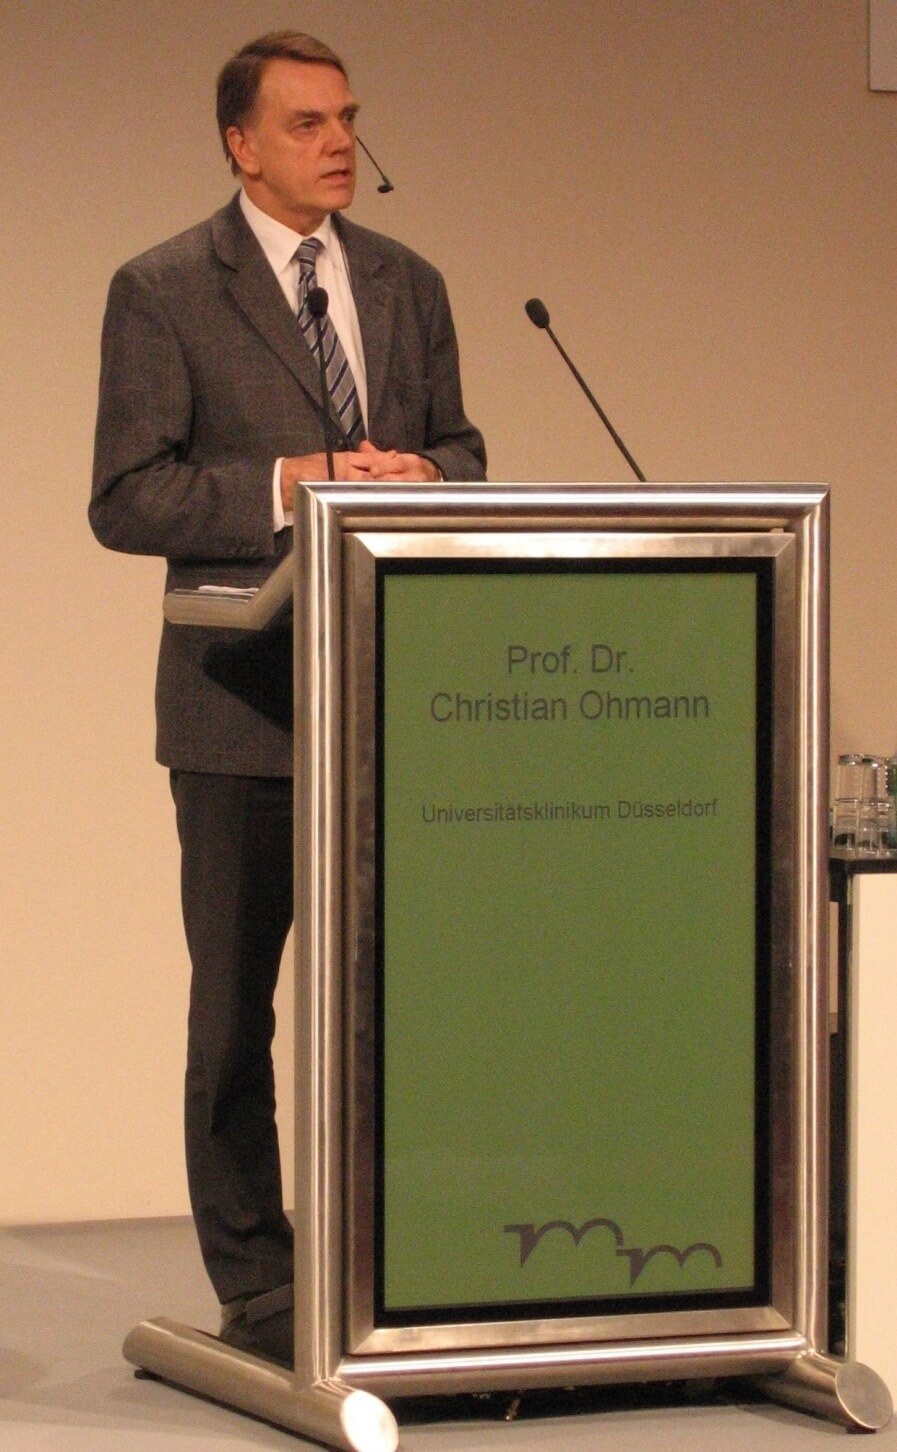 Prof. Dr. Christian Ohmann